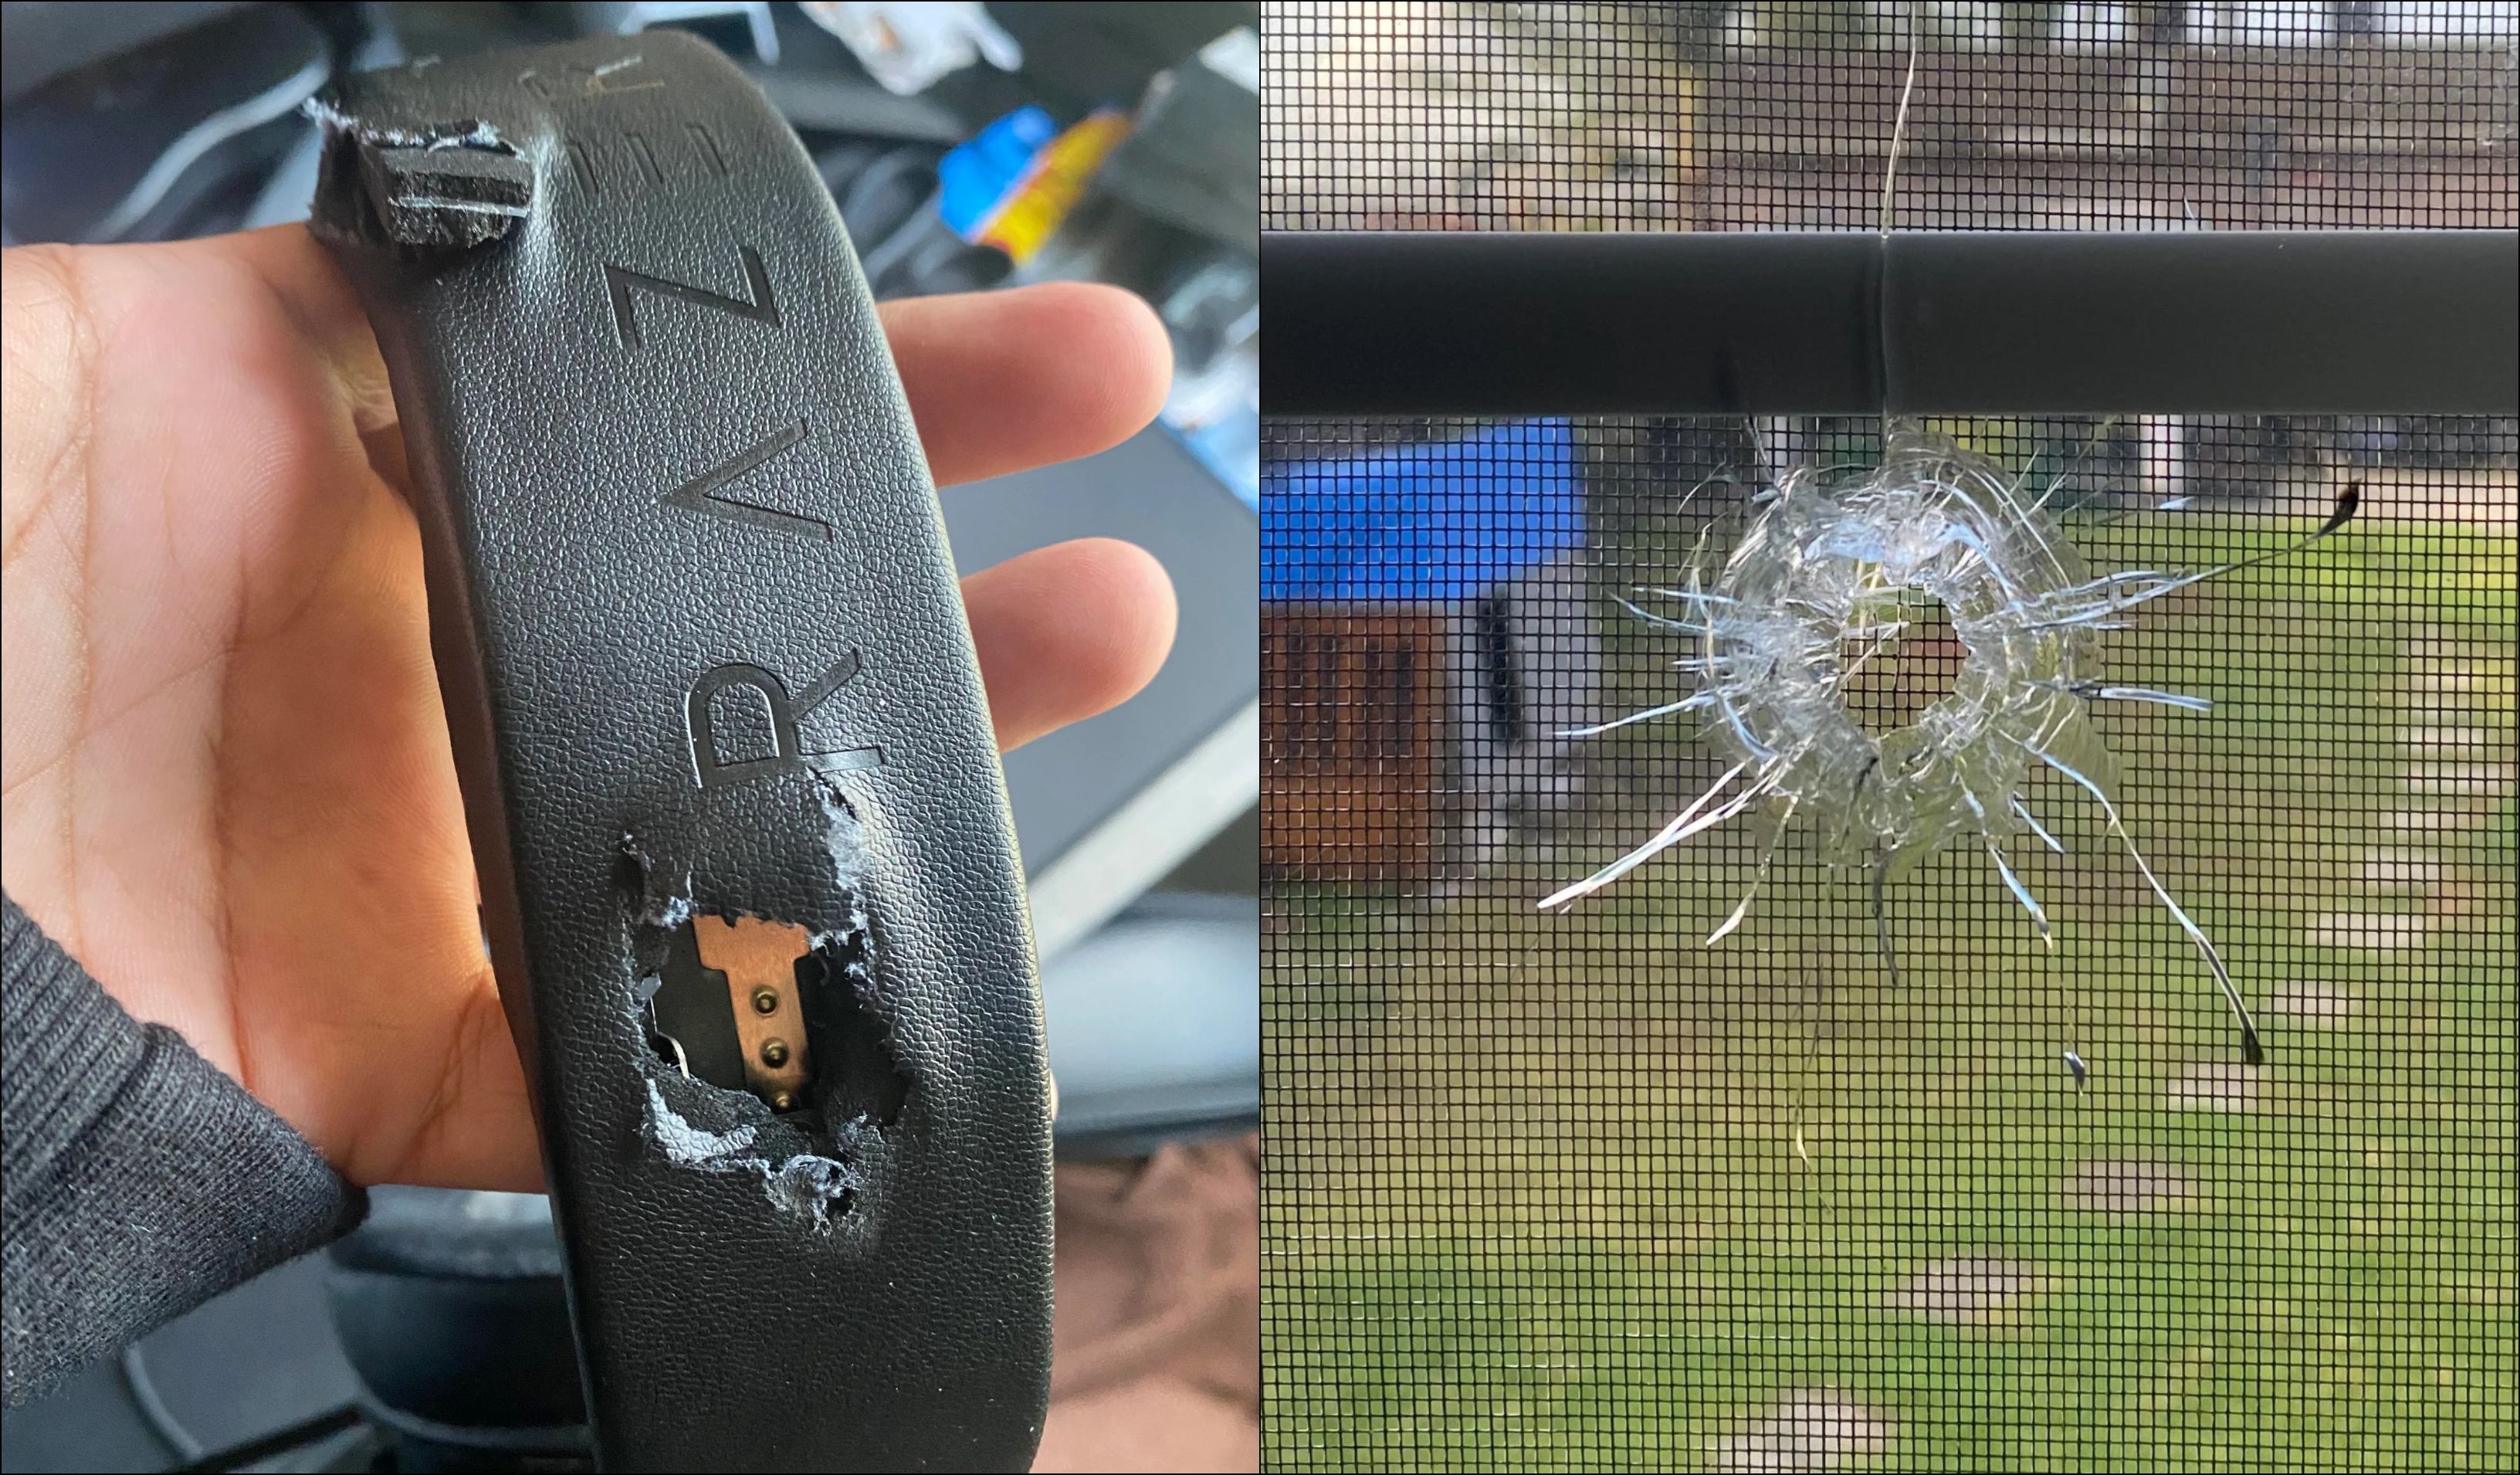 Image of headphones that were shot, bullet hole in window